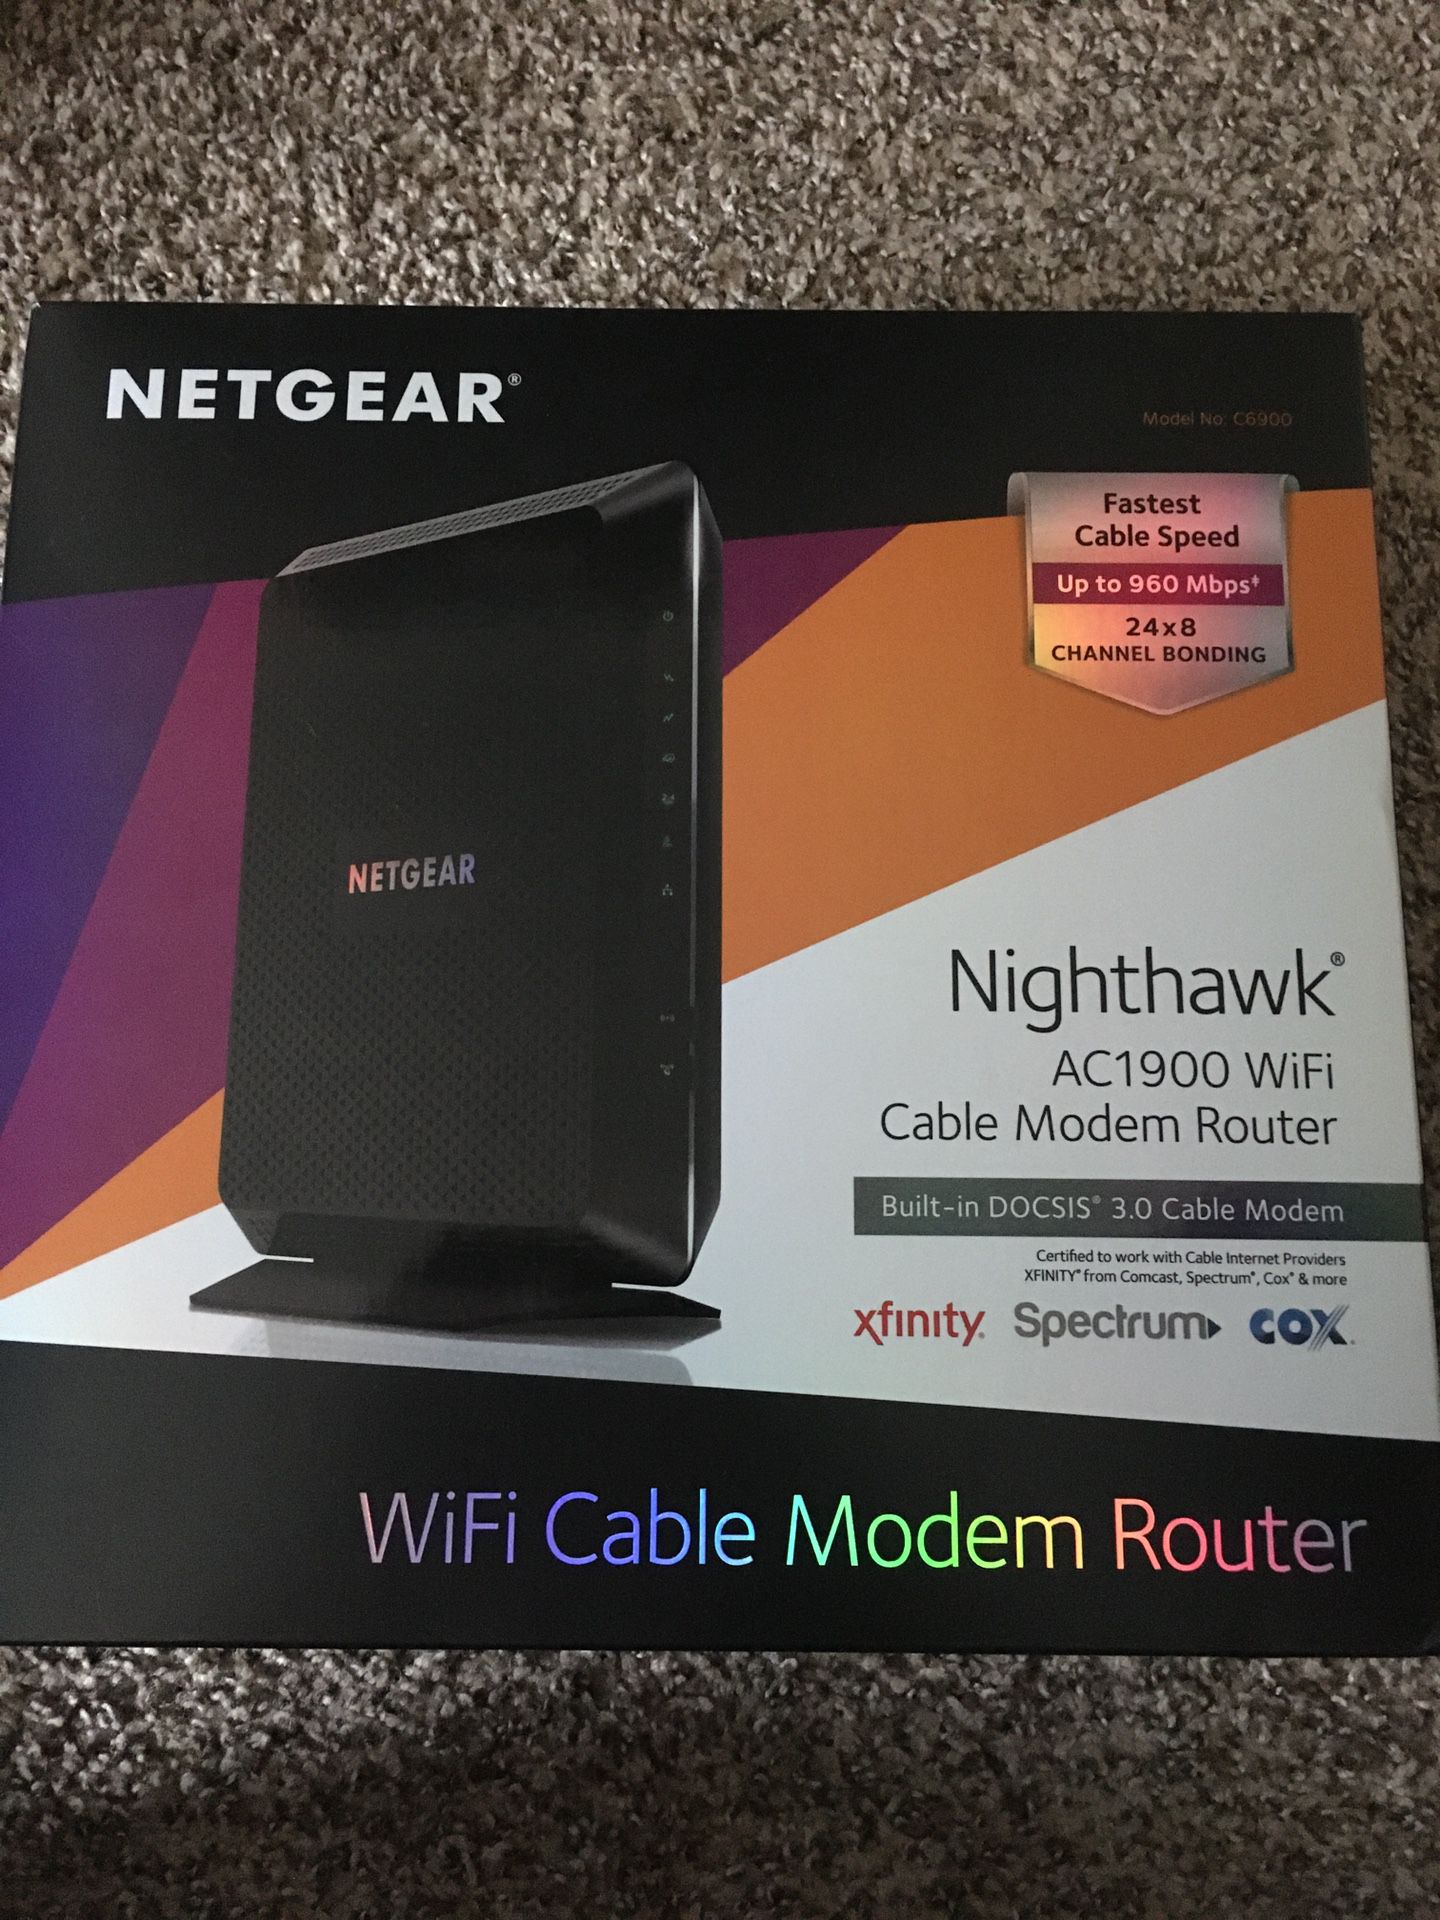 Netgear nighthawk ac1900 wifi cable modem router